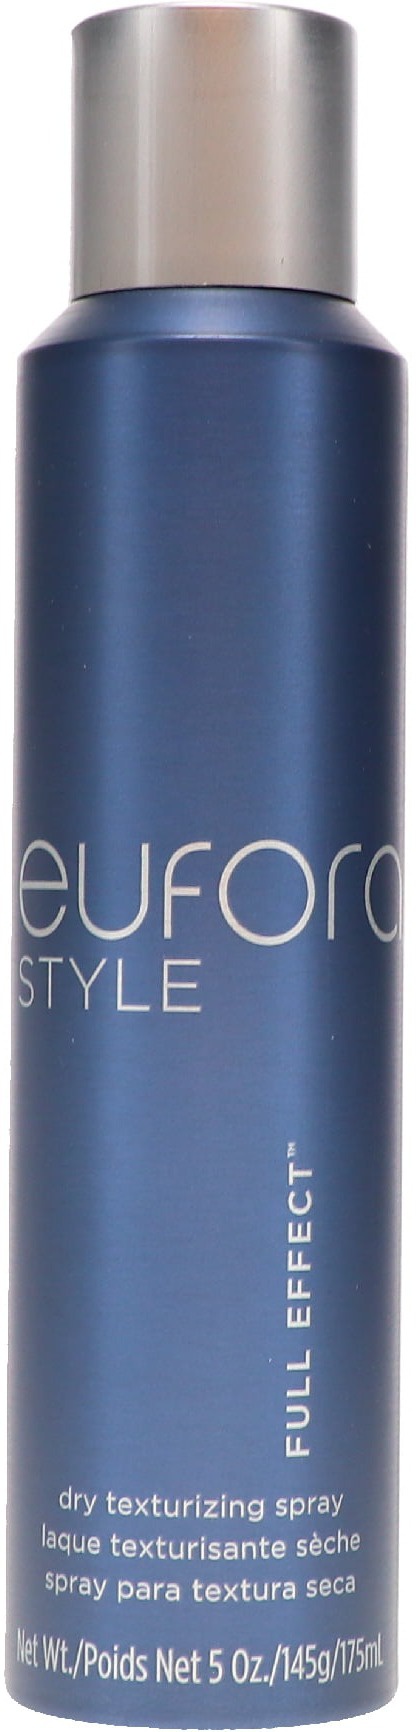 Eufora Full Effect Dry Texturizing Spray